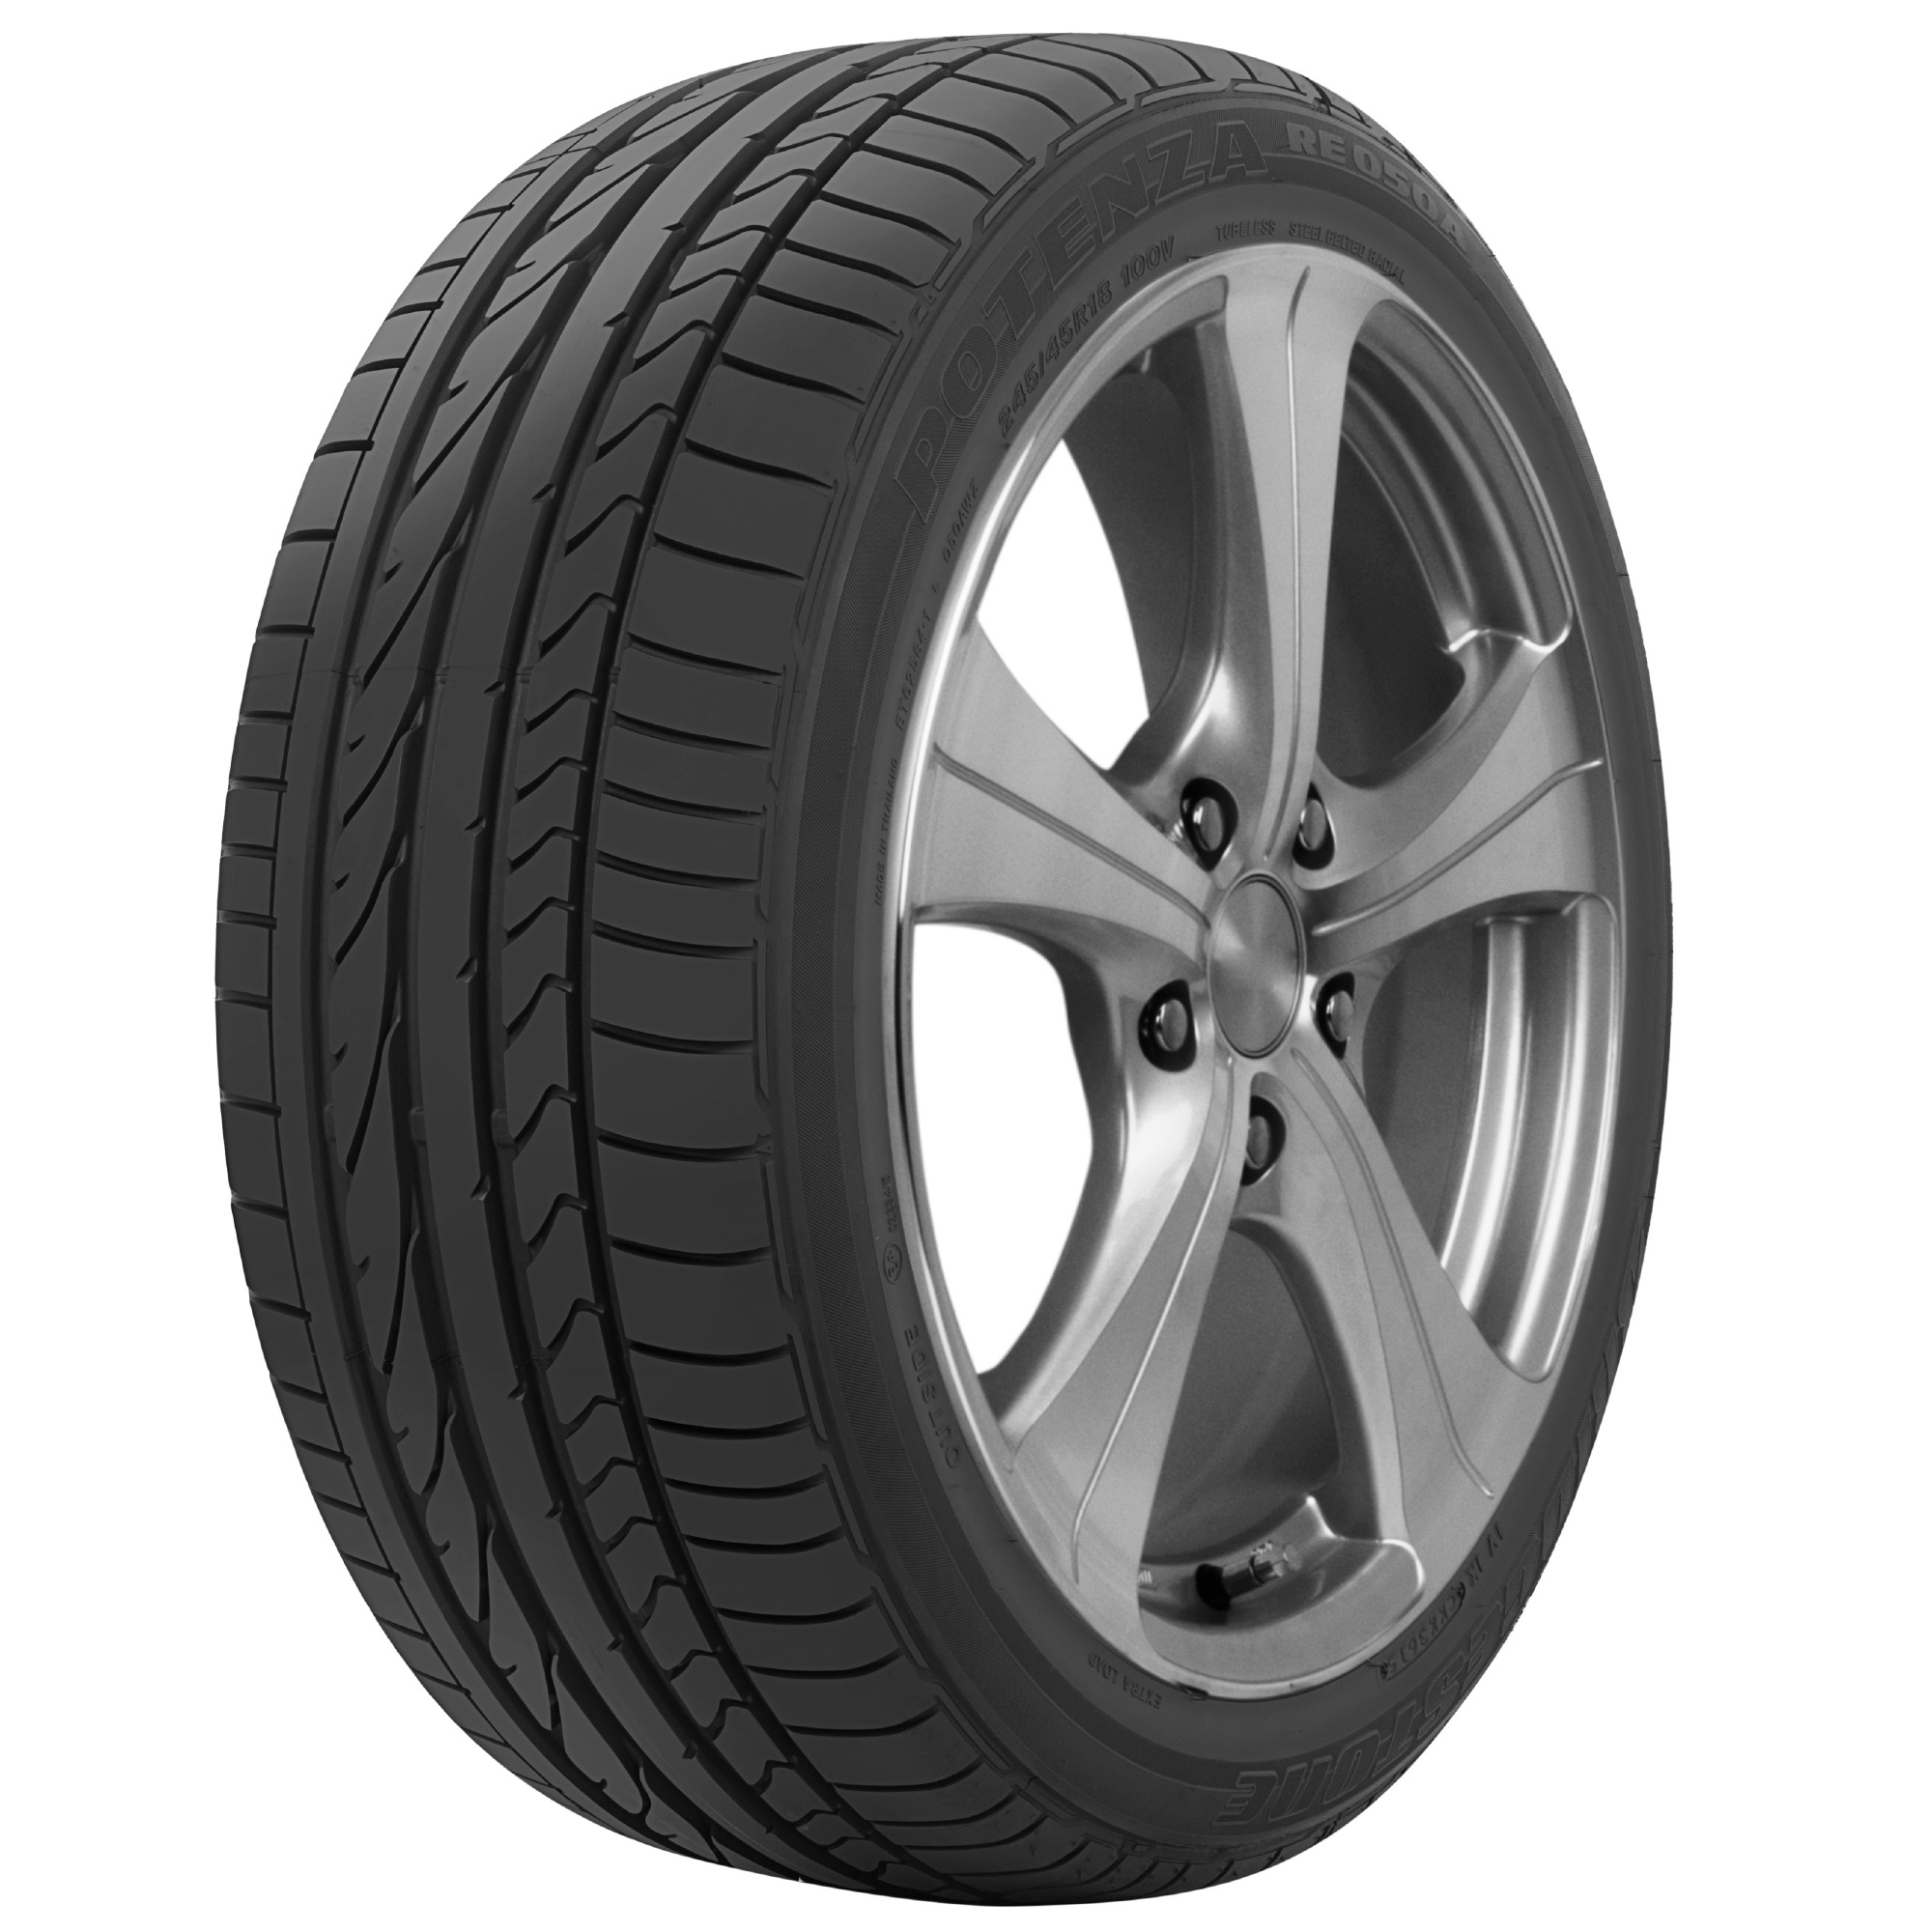 Potenza RE050A Run-Flat Technology Tyre